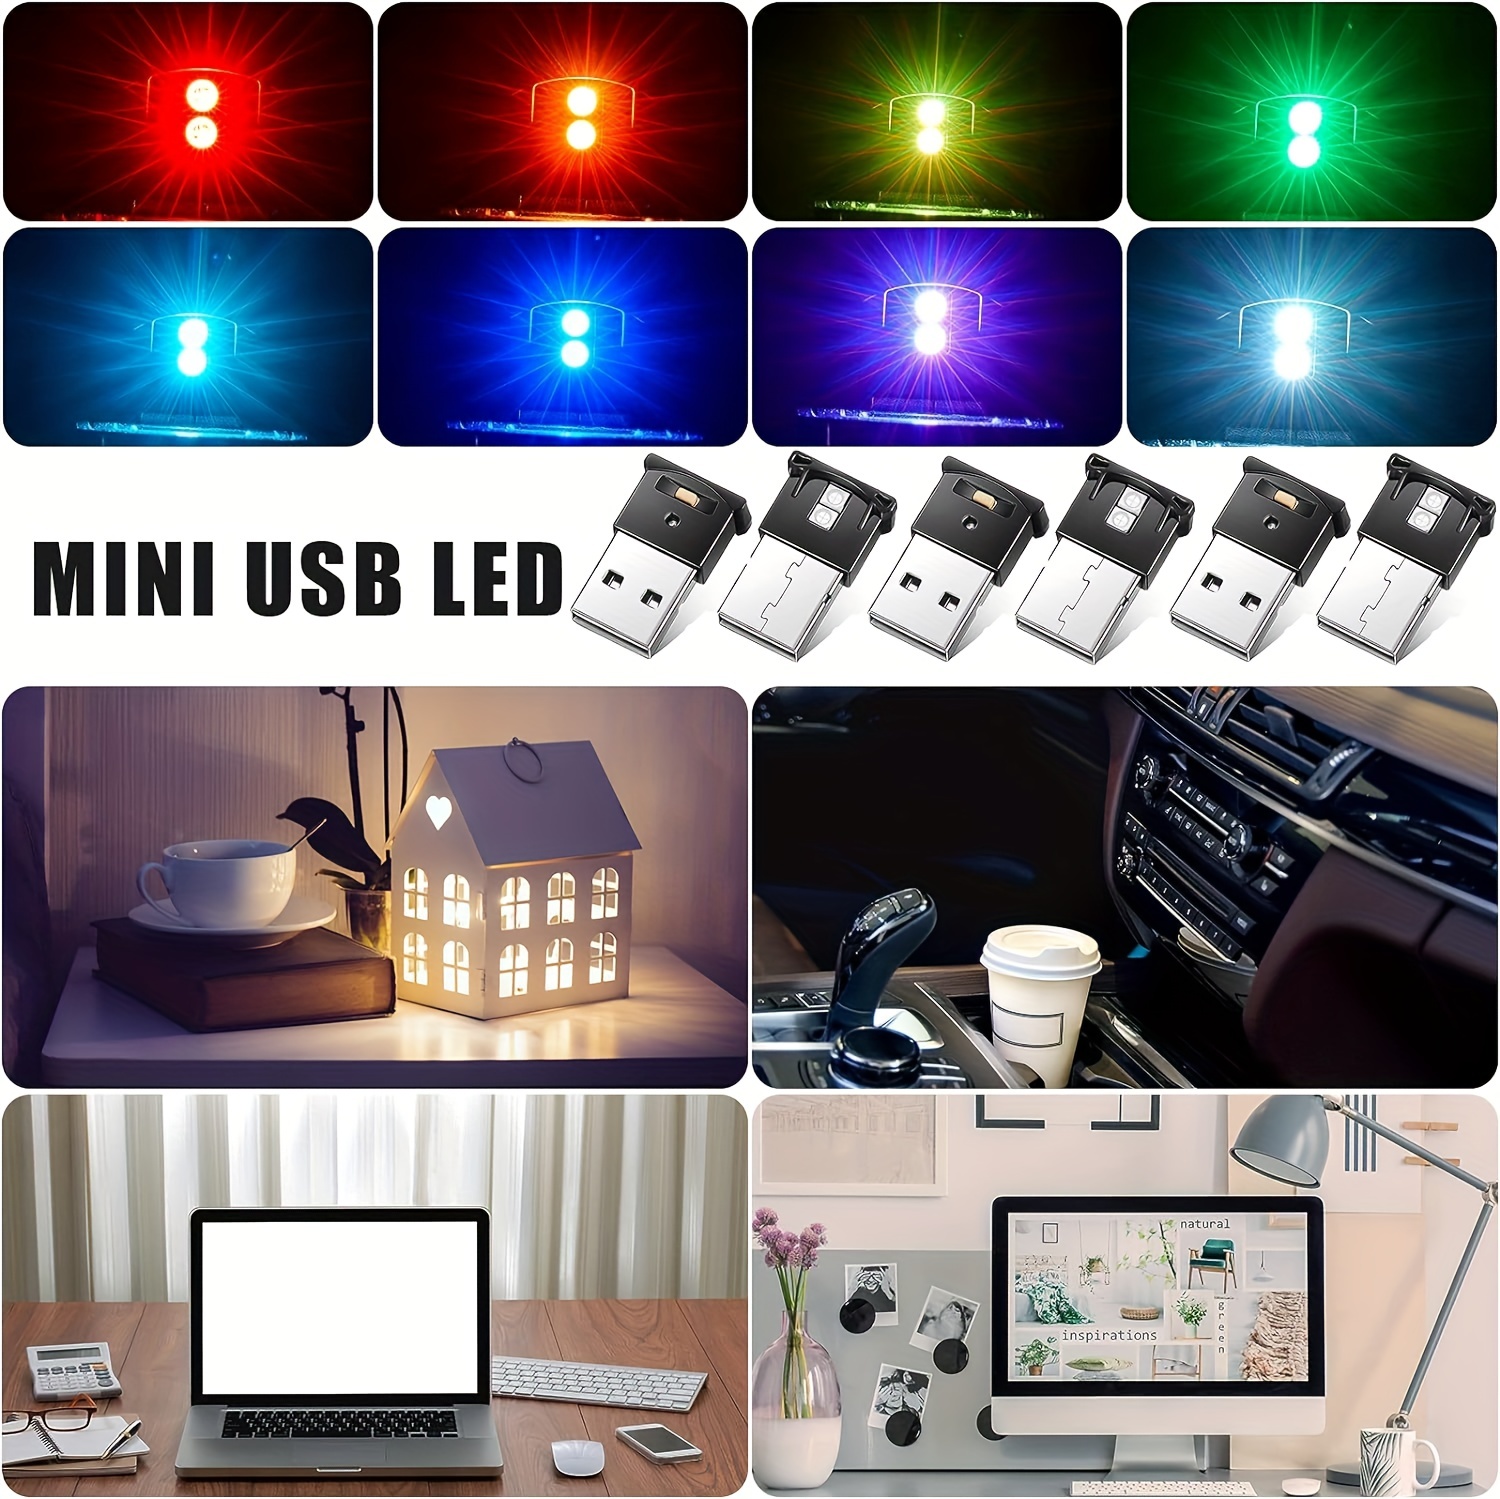 Mini USB Type-C LED Light, RGB Car LED Interior Lighting Direct Current 5V  Smart USB LED Atmosphere Light, Home Office Decoration Night Lamp,8 Colors